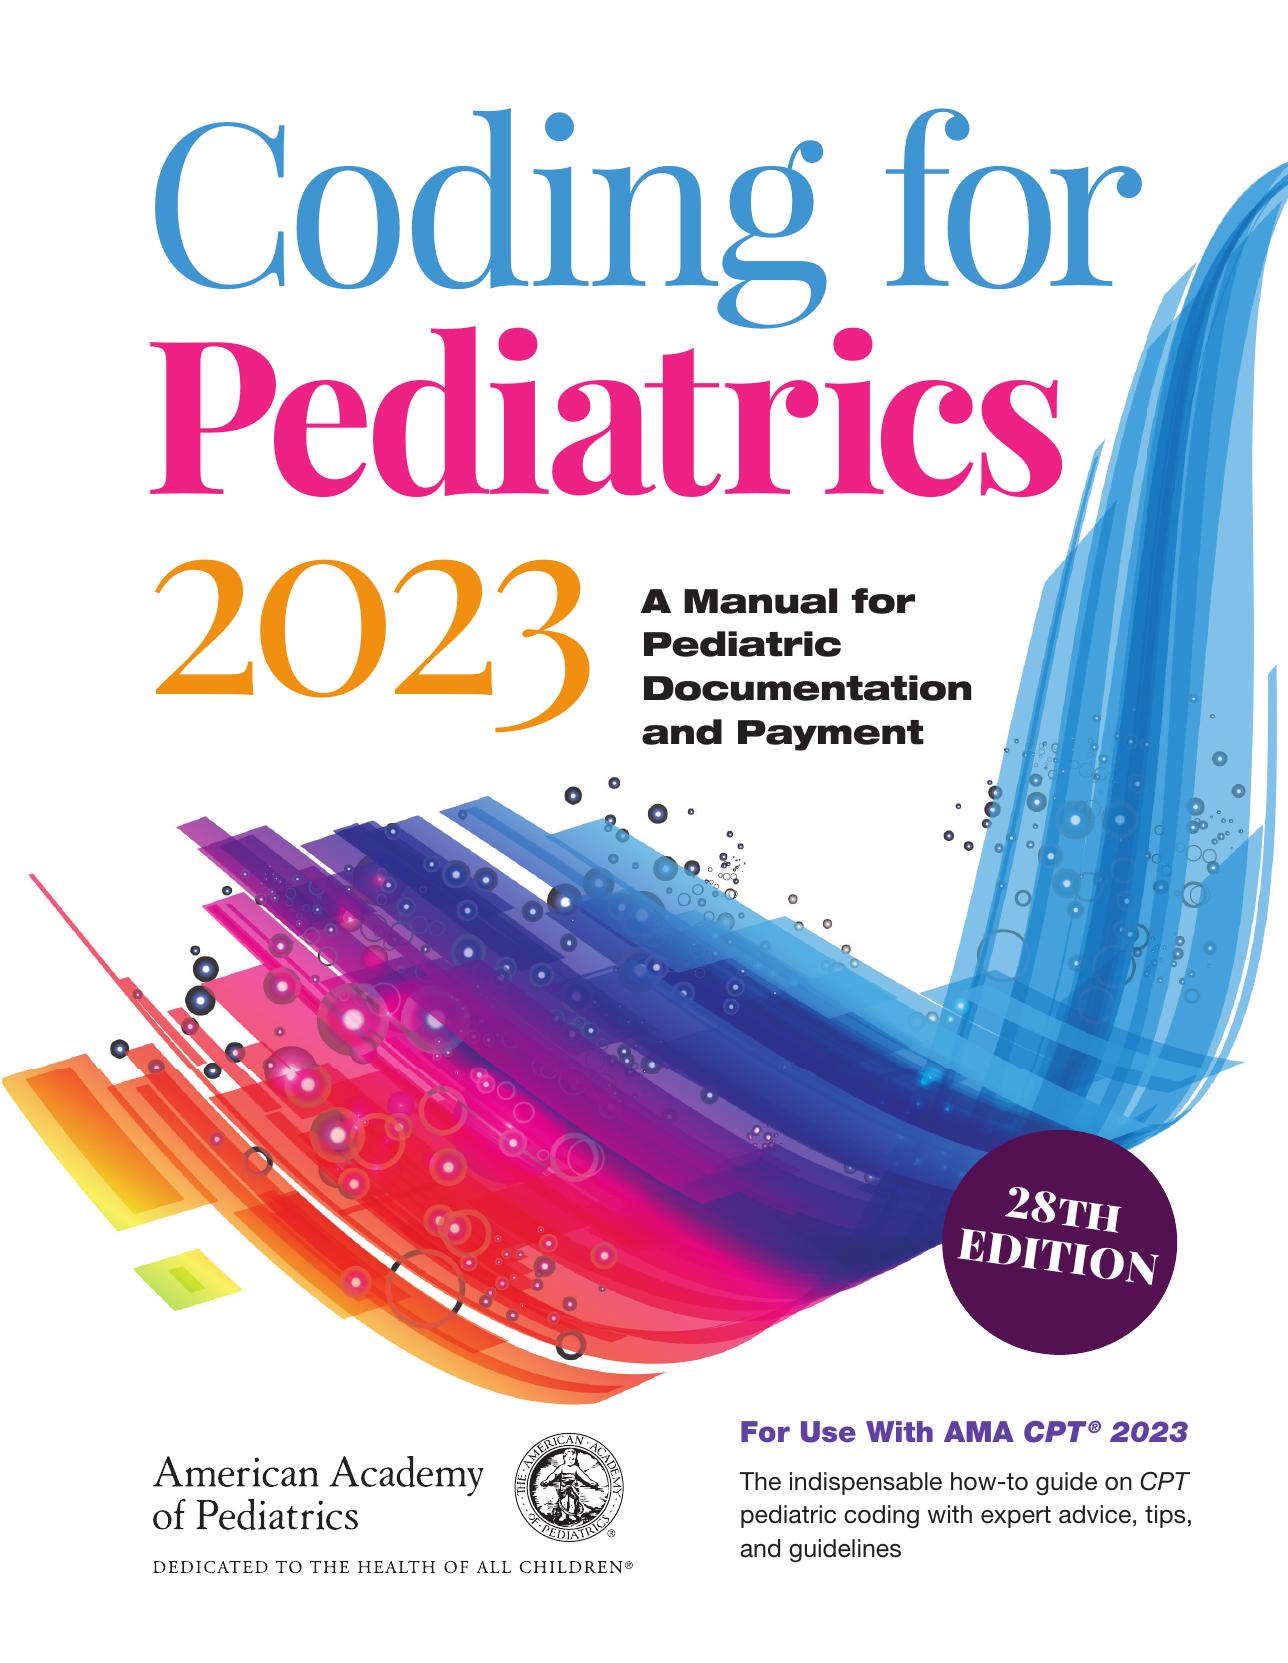 Coding for Pediatrics 2023 A Manual for Pediatric Documentation and